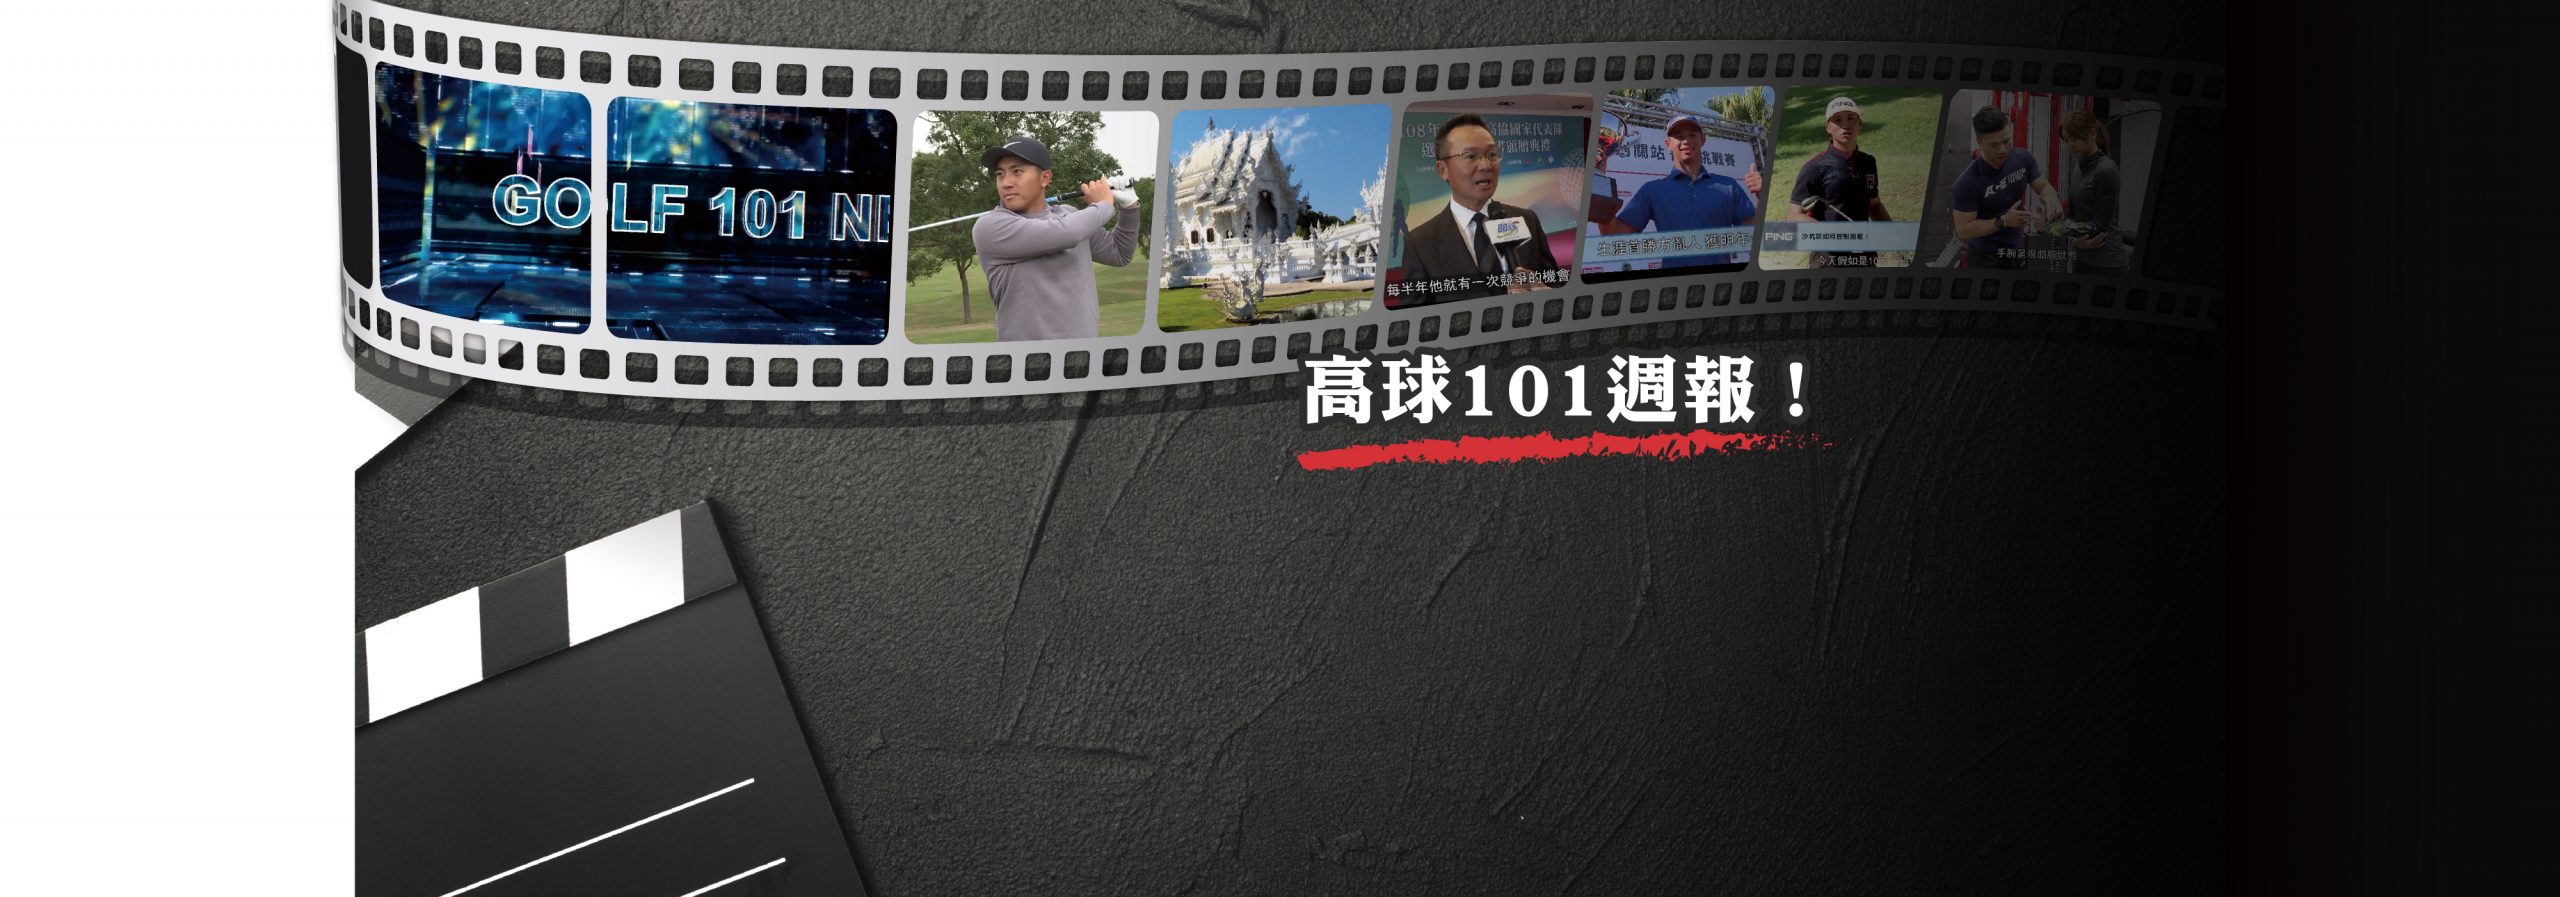 PING Golf Taiwan 2018年6月份試打會